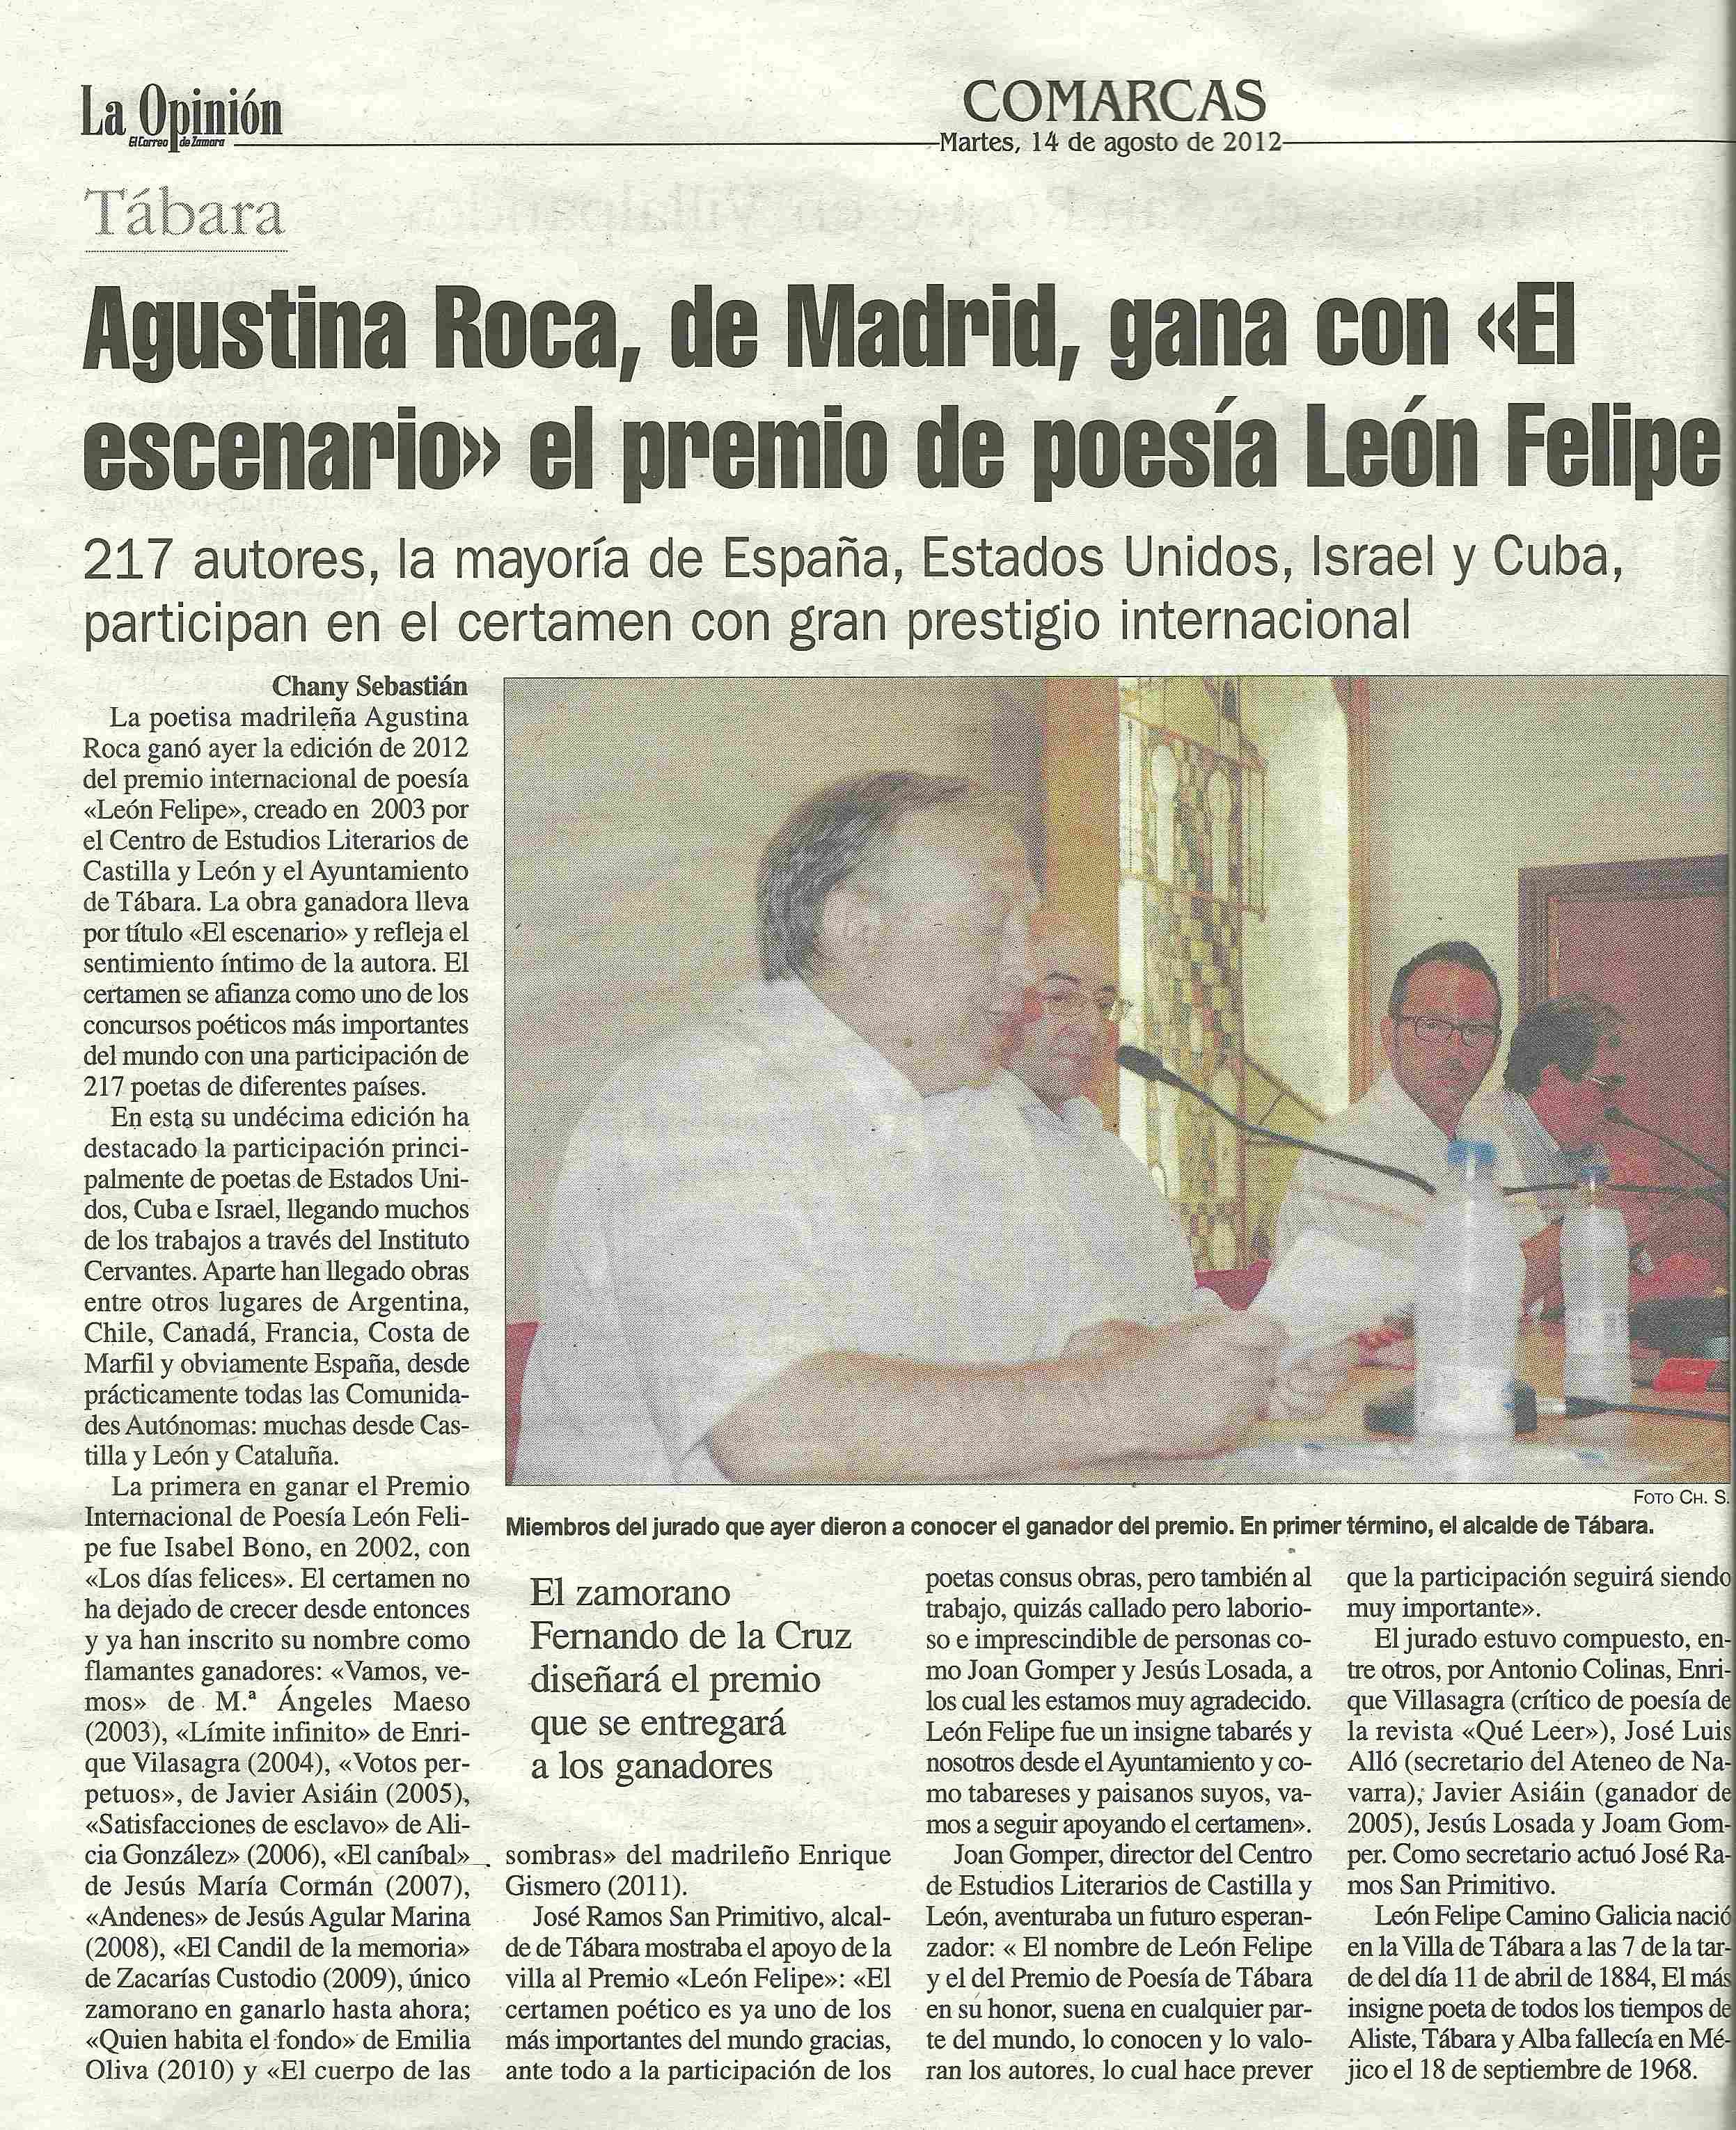 LA OPINION DE ZAMORA
: Agustina Roca, IX Premio Internacional de Poesía 'León Felipe'.
